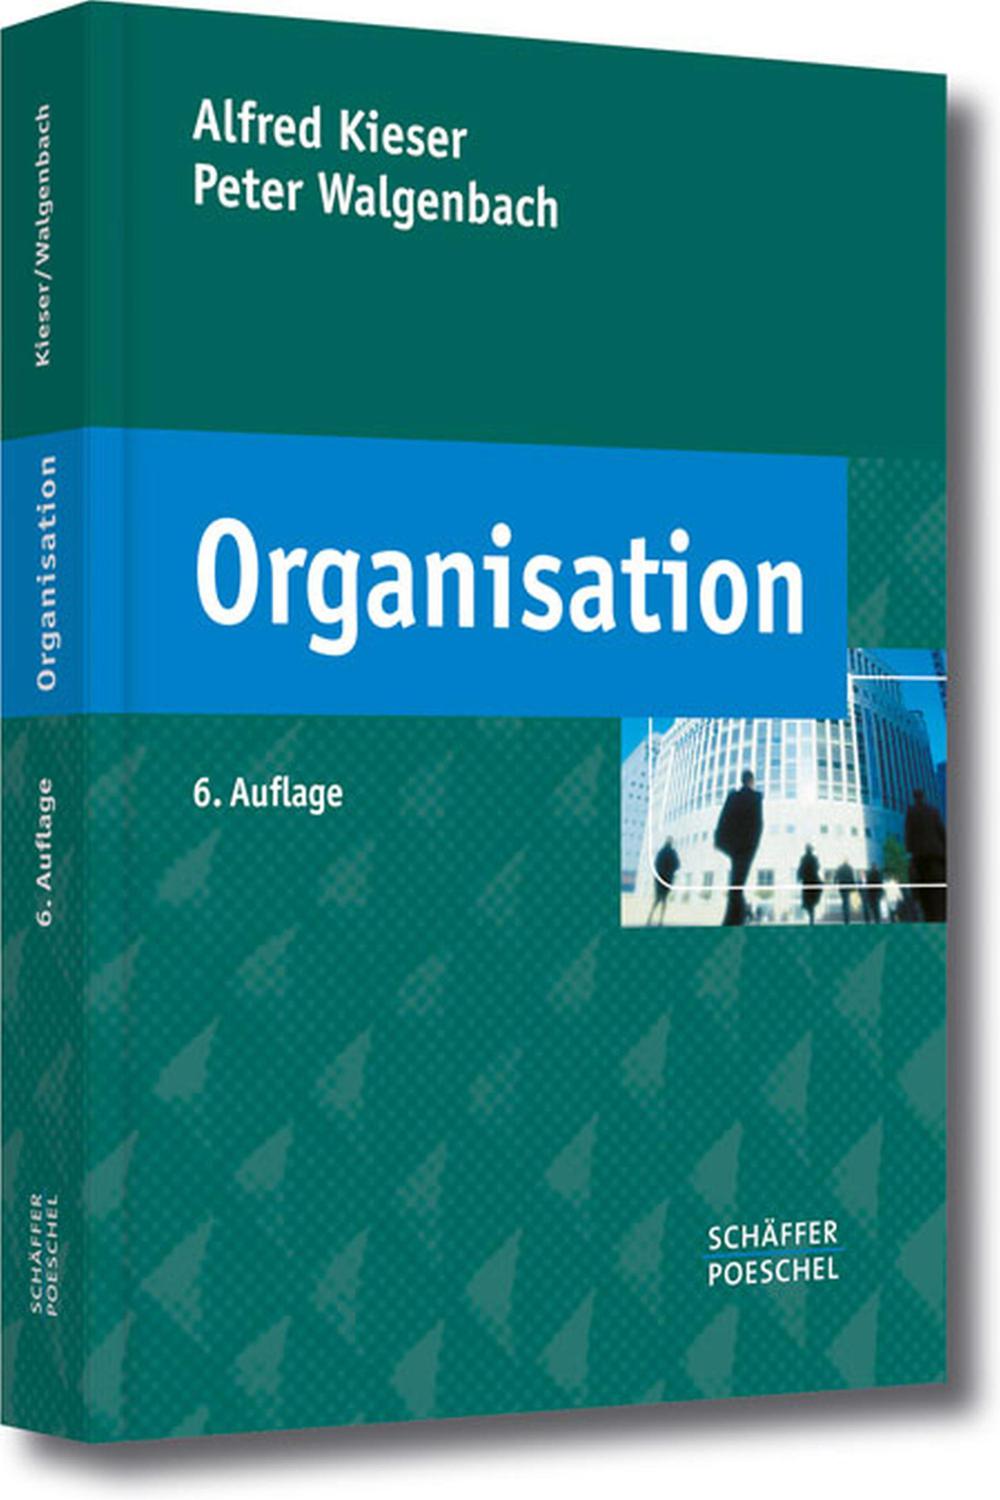 Organisation - Alfred Kieser, Peter Walgenbach,,